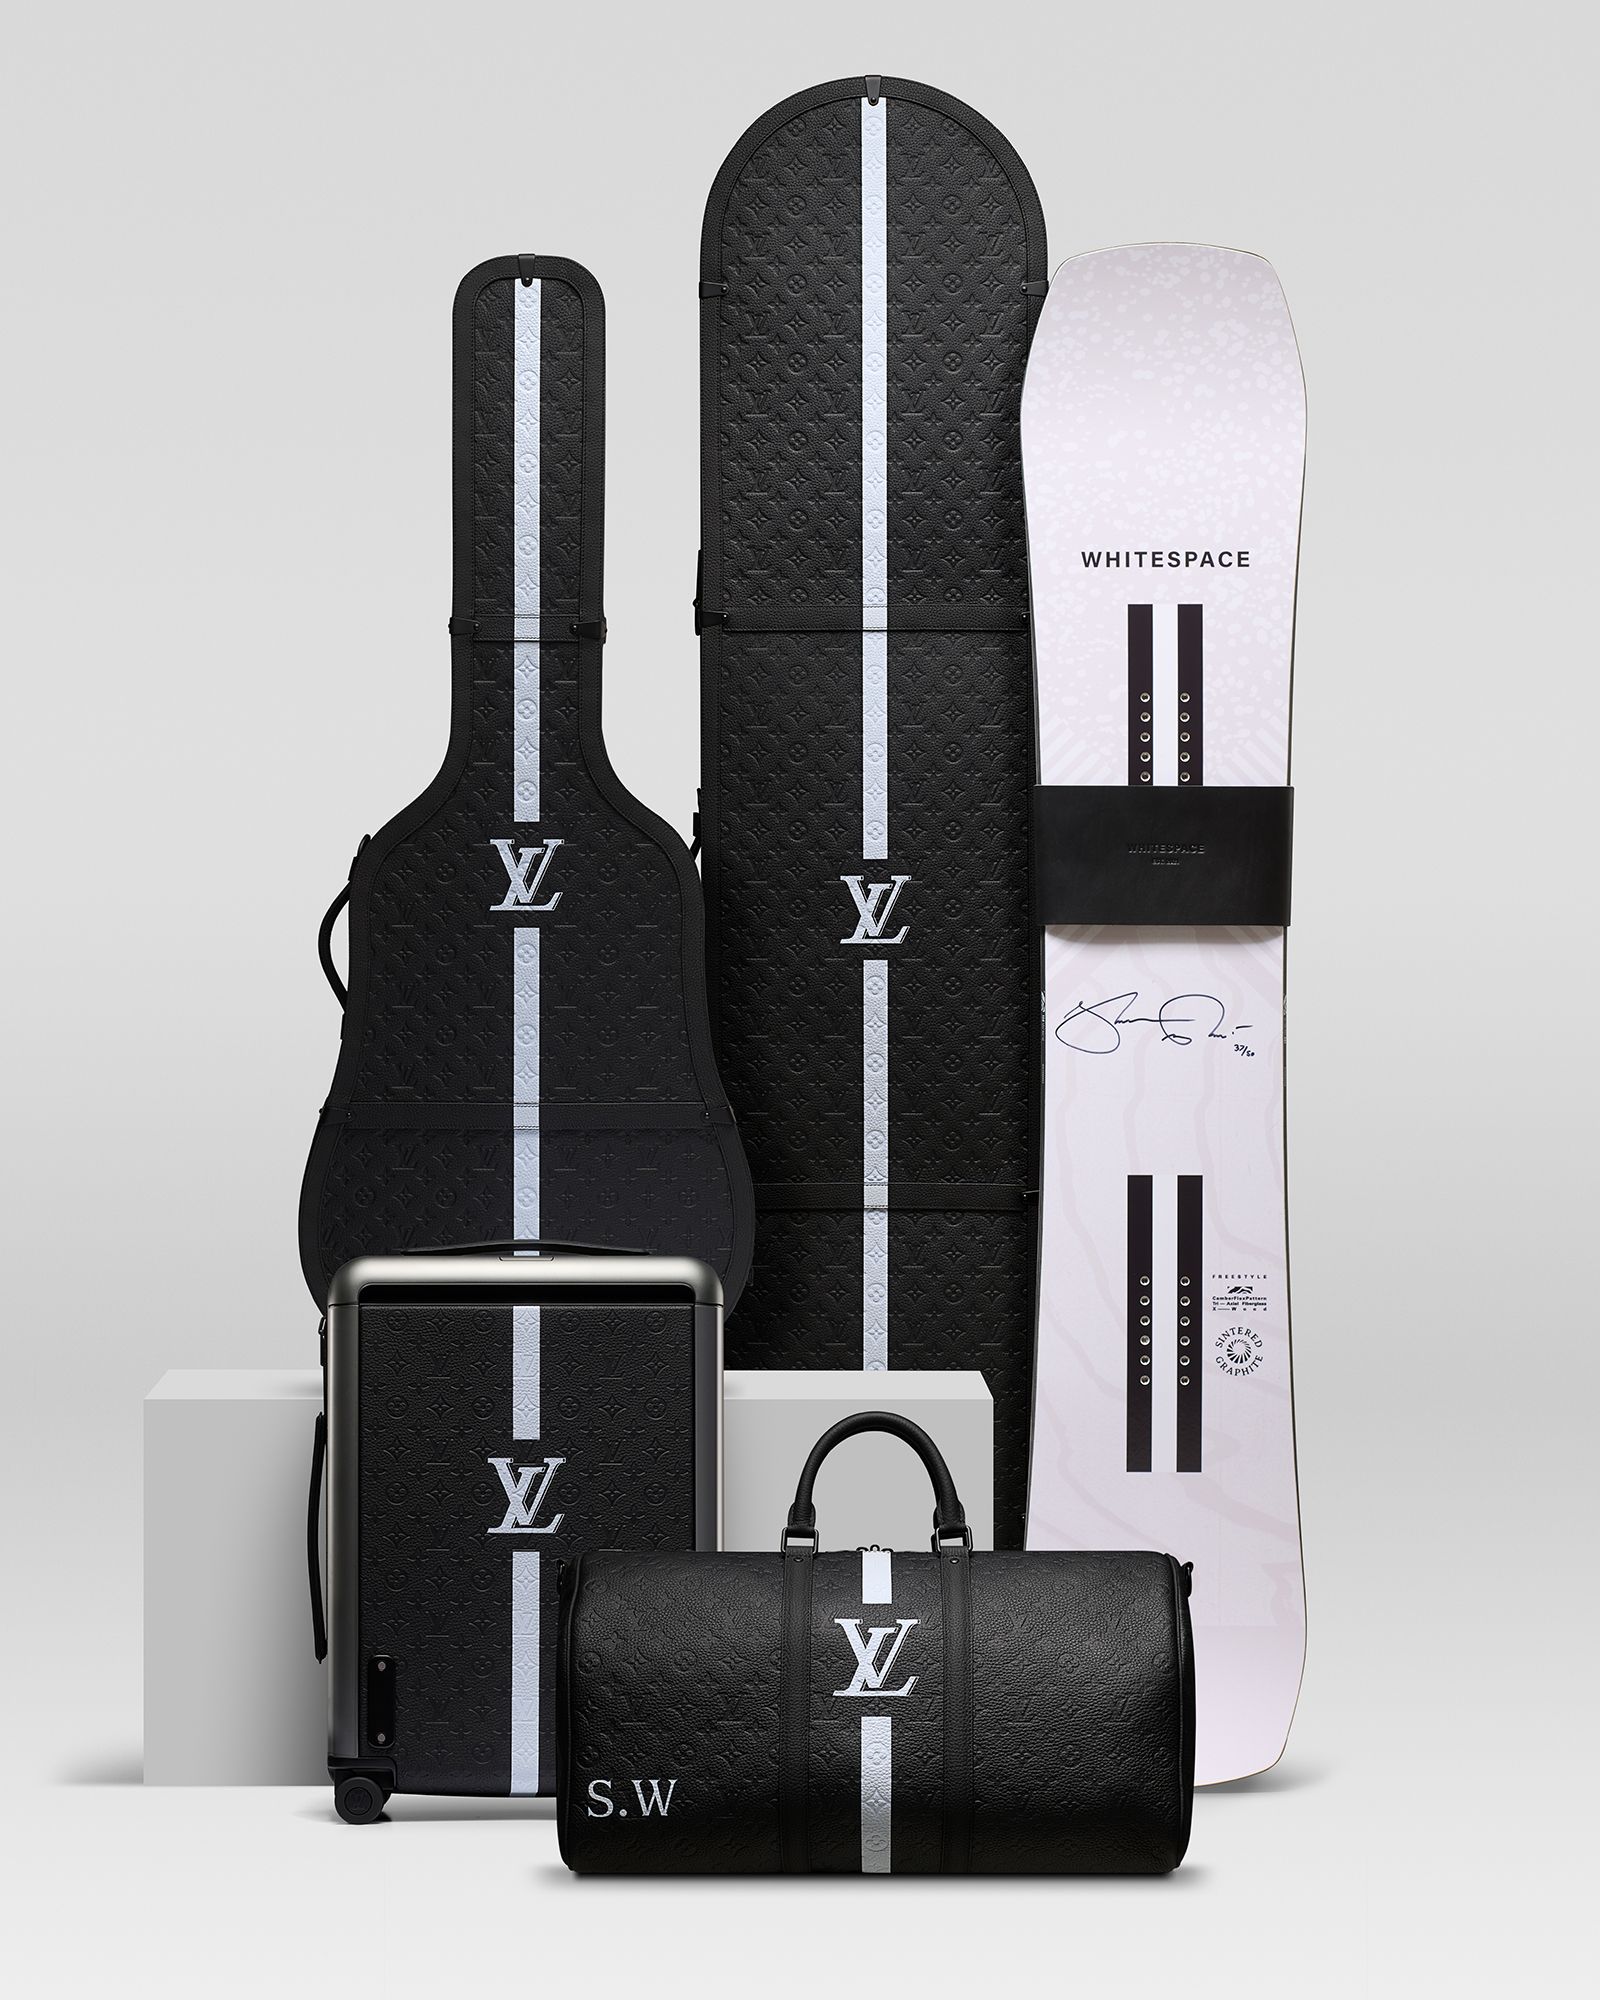 Louis Vuitton Snowboard $8,000 - InTheSnow